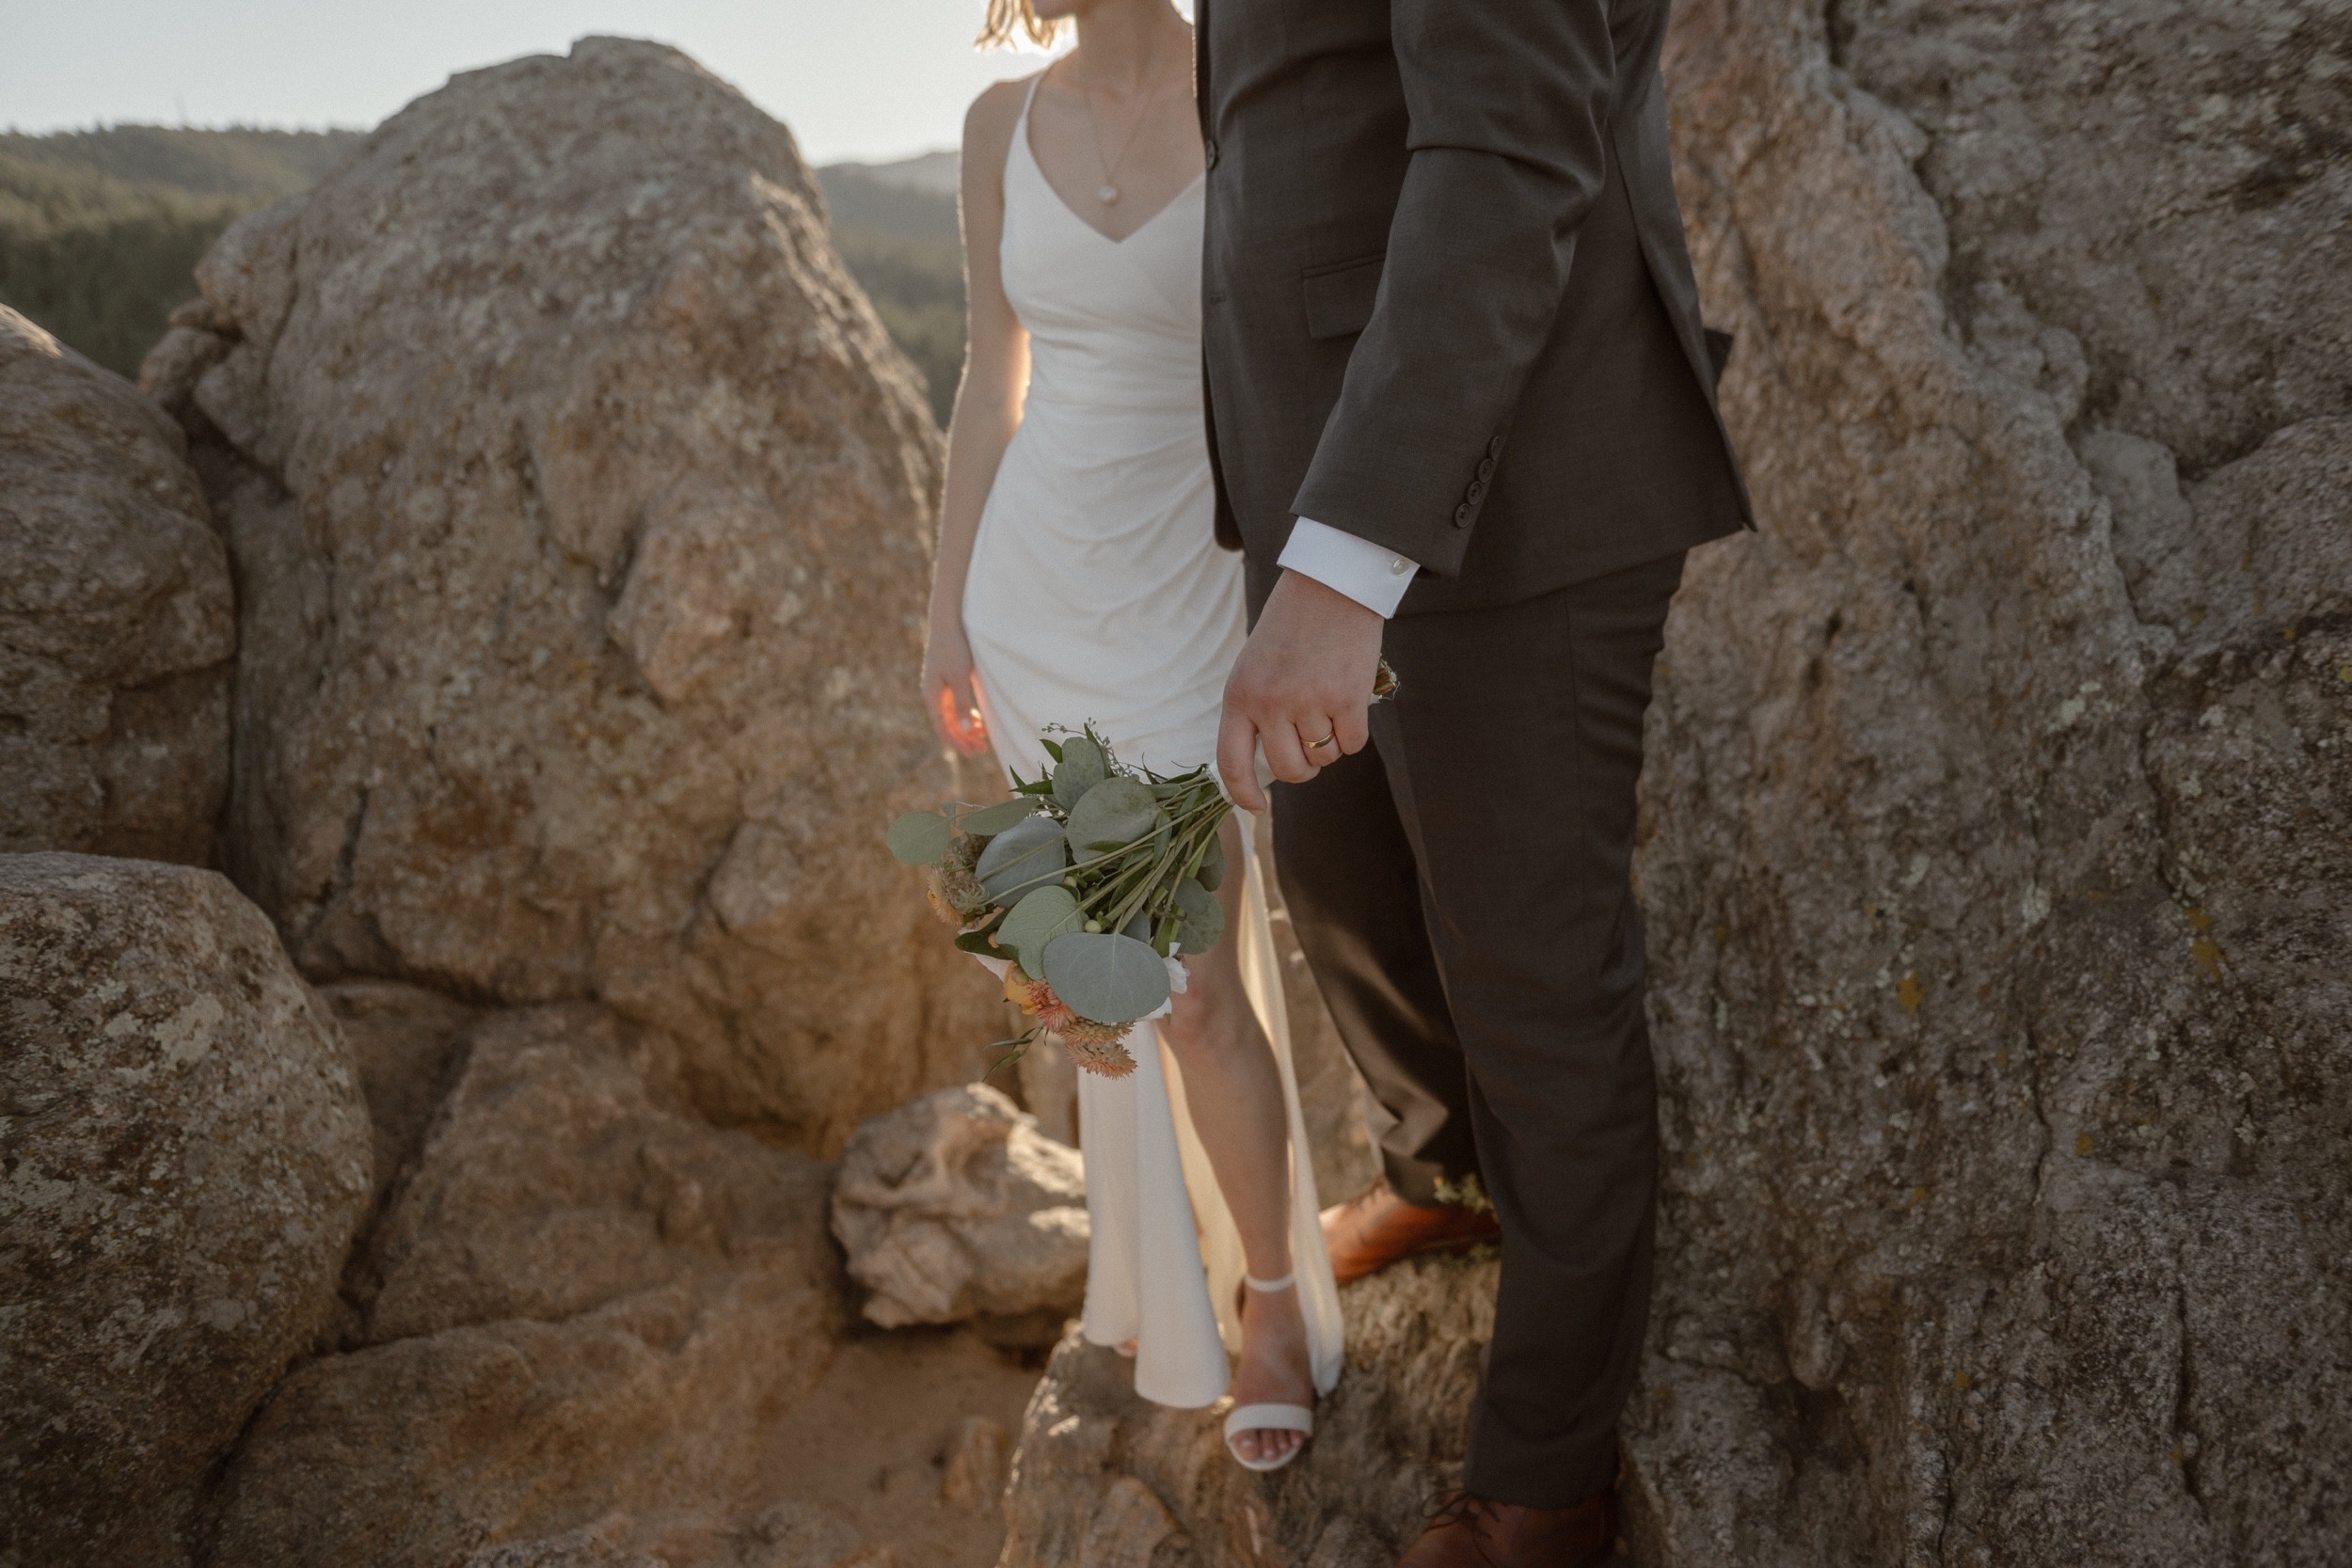 Boulder, Colorado elopement photos taken at Flagstaff Mountain and Lost Gulch Overlook | Boulder elopement location | Intimate wedding | Boulder Colorado wedding | Colorado elopement | Antibride wedding | Anti-bride wedding | Ashley Joyce Photography